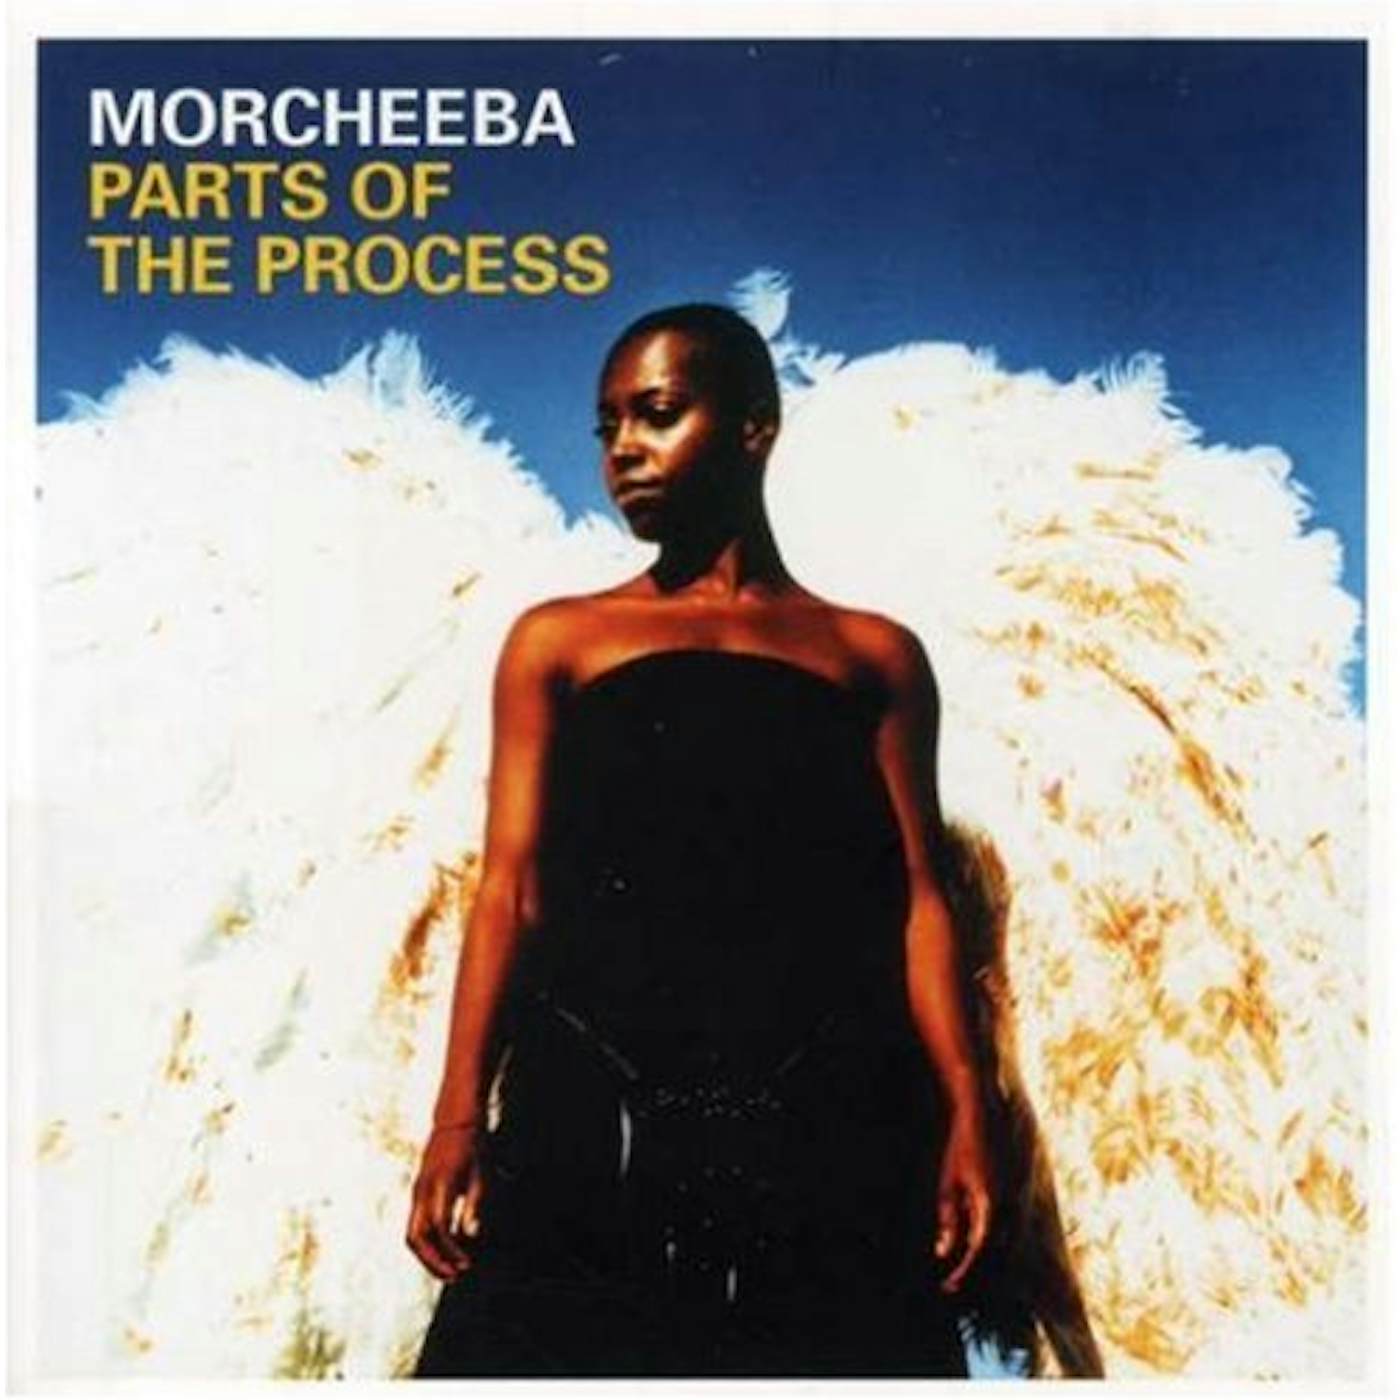 Morcheeba PARTS OF THE PROCESS: SPECIAL EDITION CD